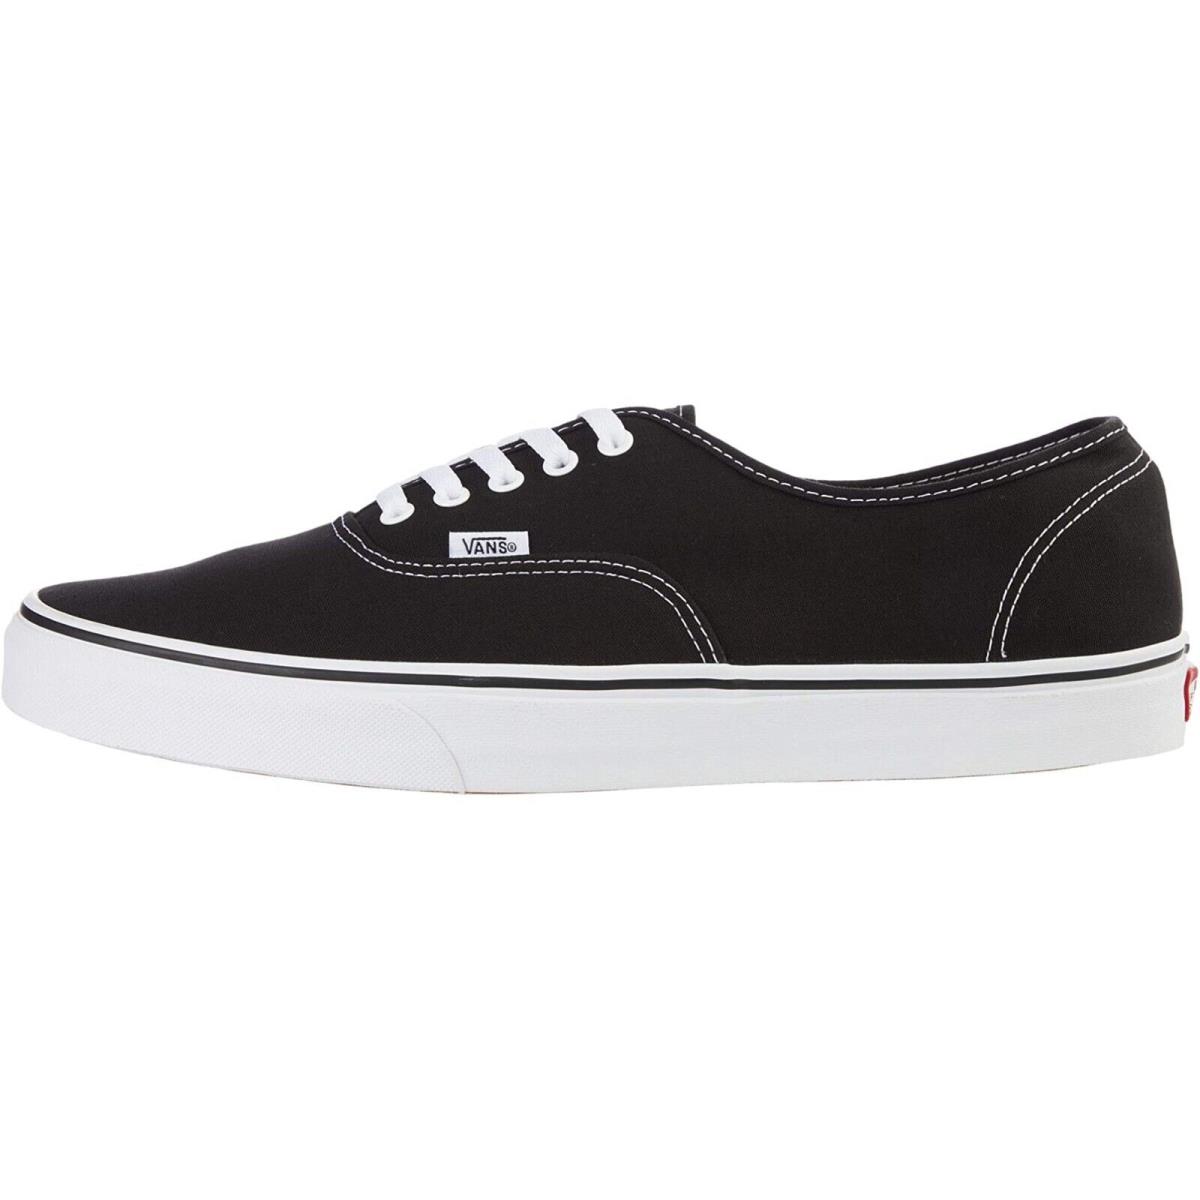 Vans Unisex Mens Womens Canvas Sneakers Skate Shoes Black/White